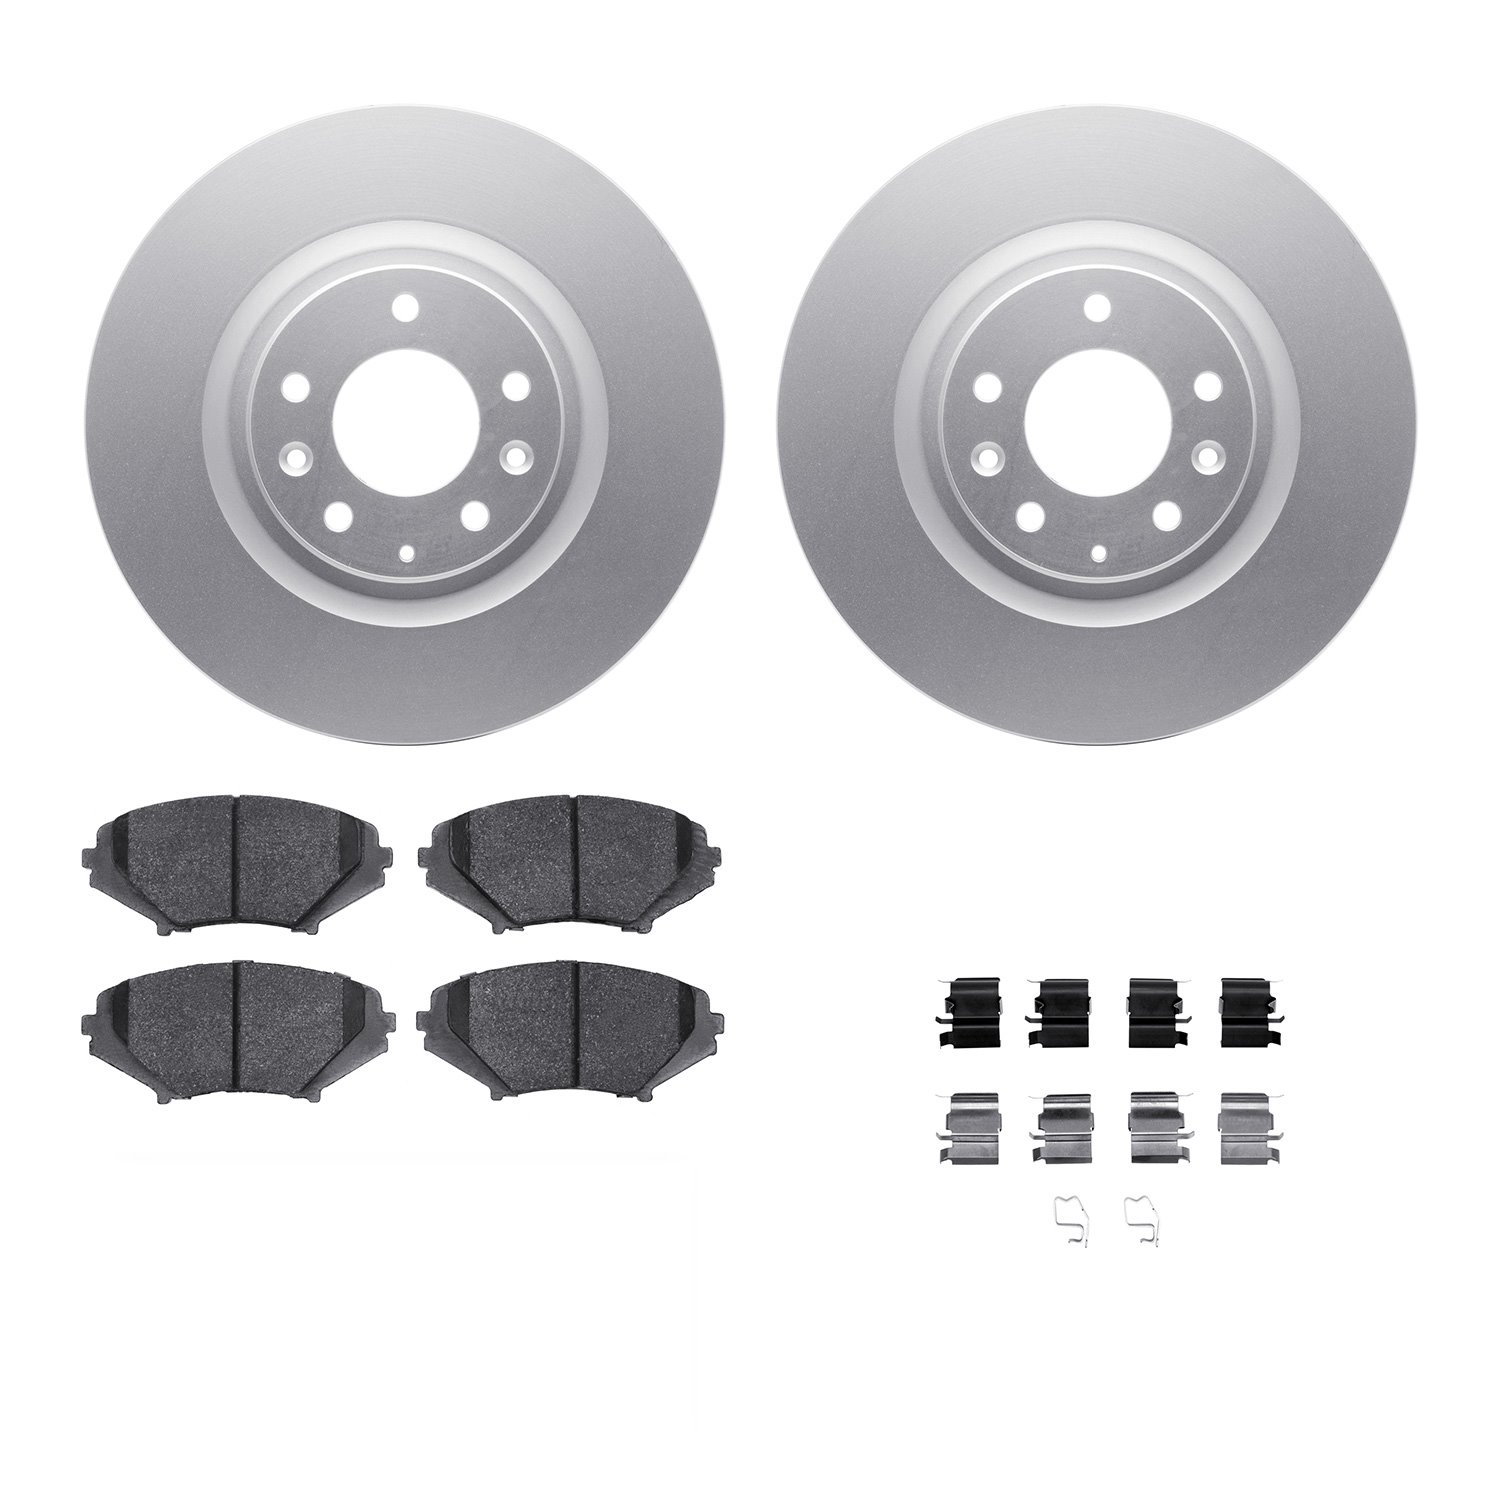 4312-80015 Geospec Brake Rotors with 3000-Series Ceramic Brake Pads & Hardware, 2004-2011 Ford/Lincoln/Mercury/Mazda, Position: